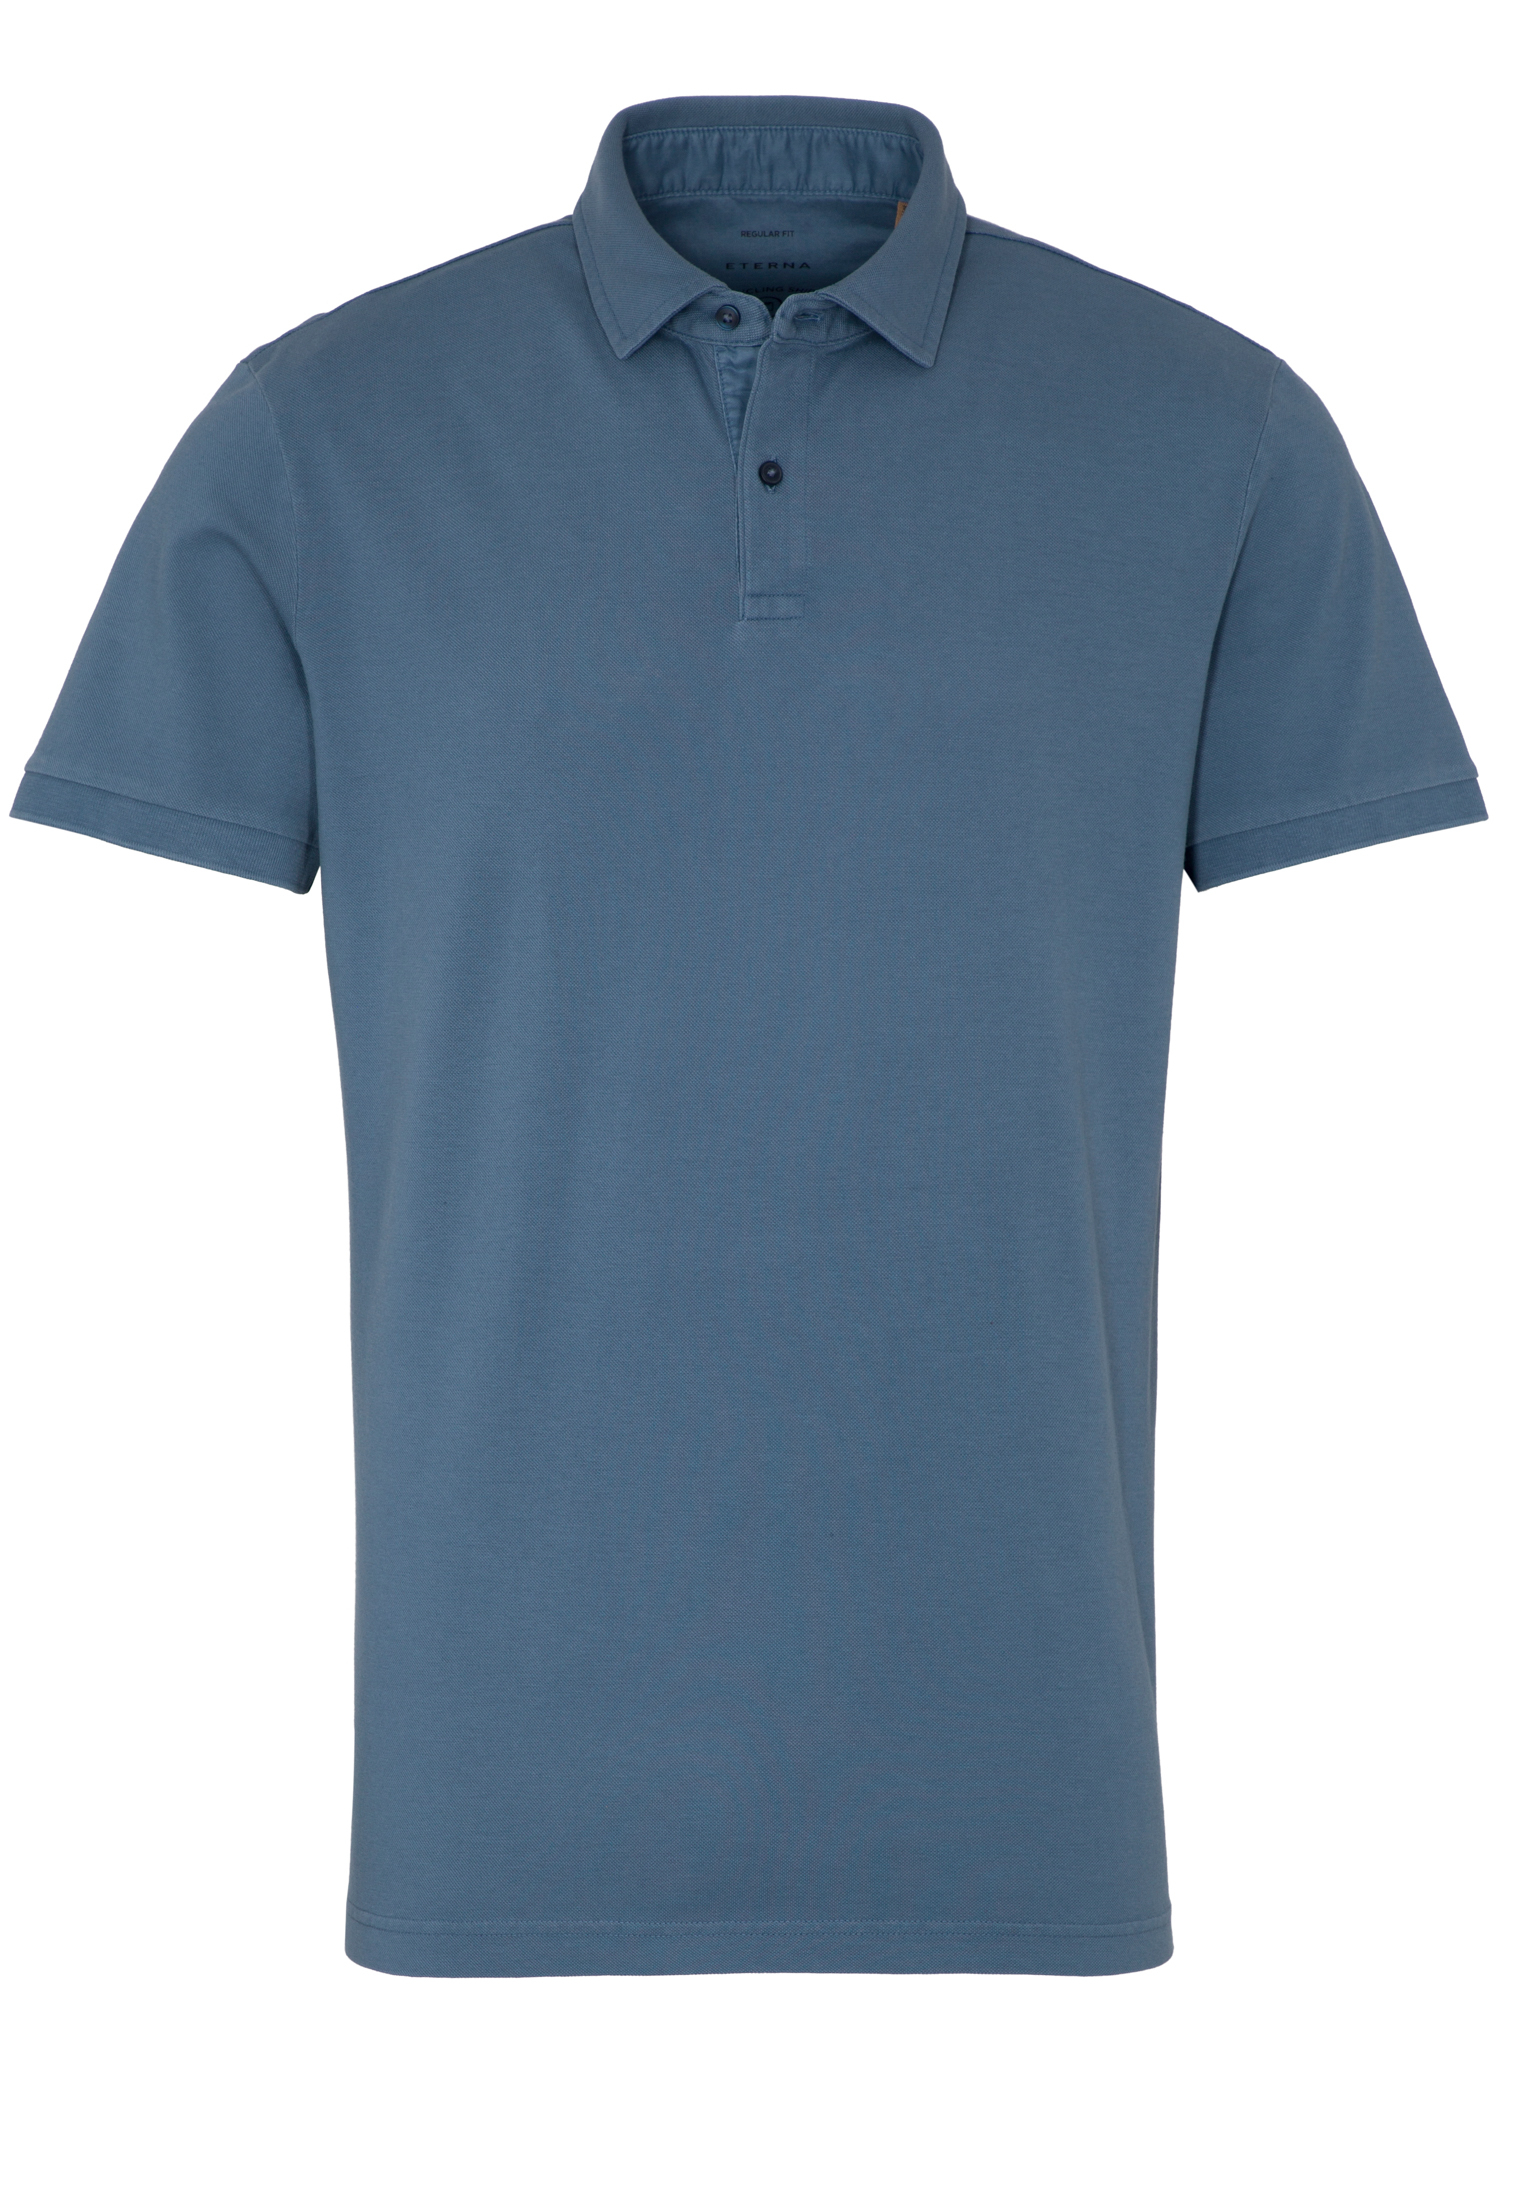 1SP00087-01-41-4XL-1/2 blau MODERN blau | Poloshirt unifarben FIT | | Kurzarm | in 4XL